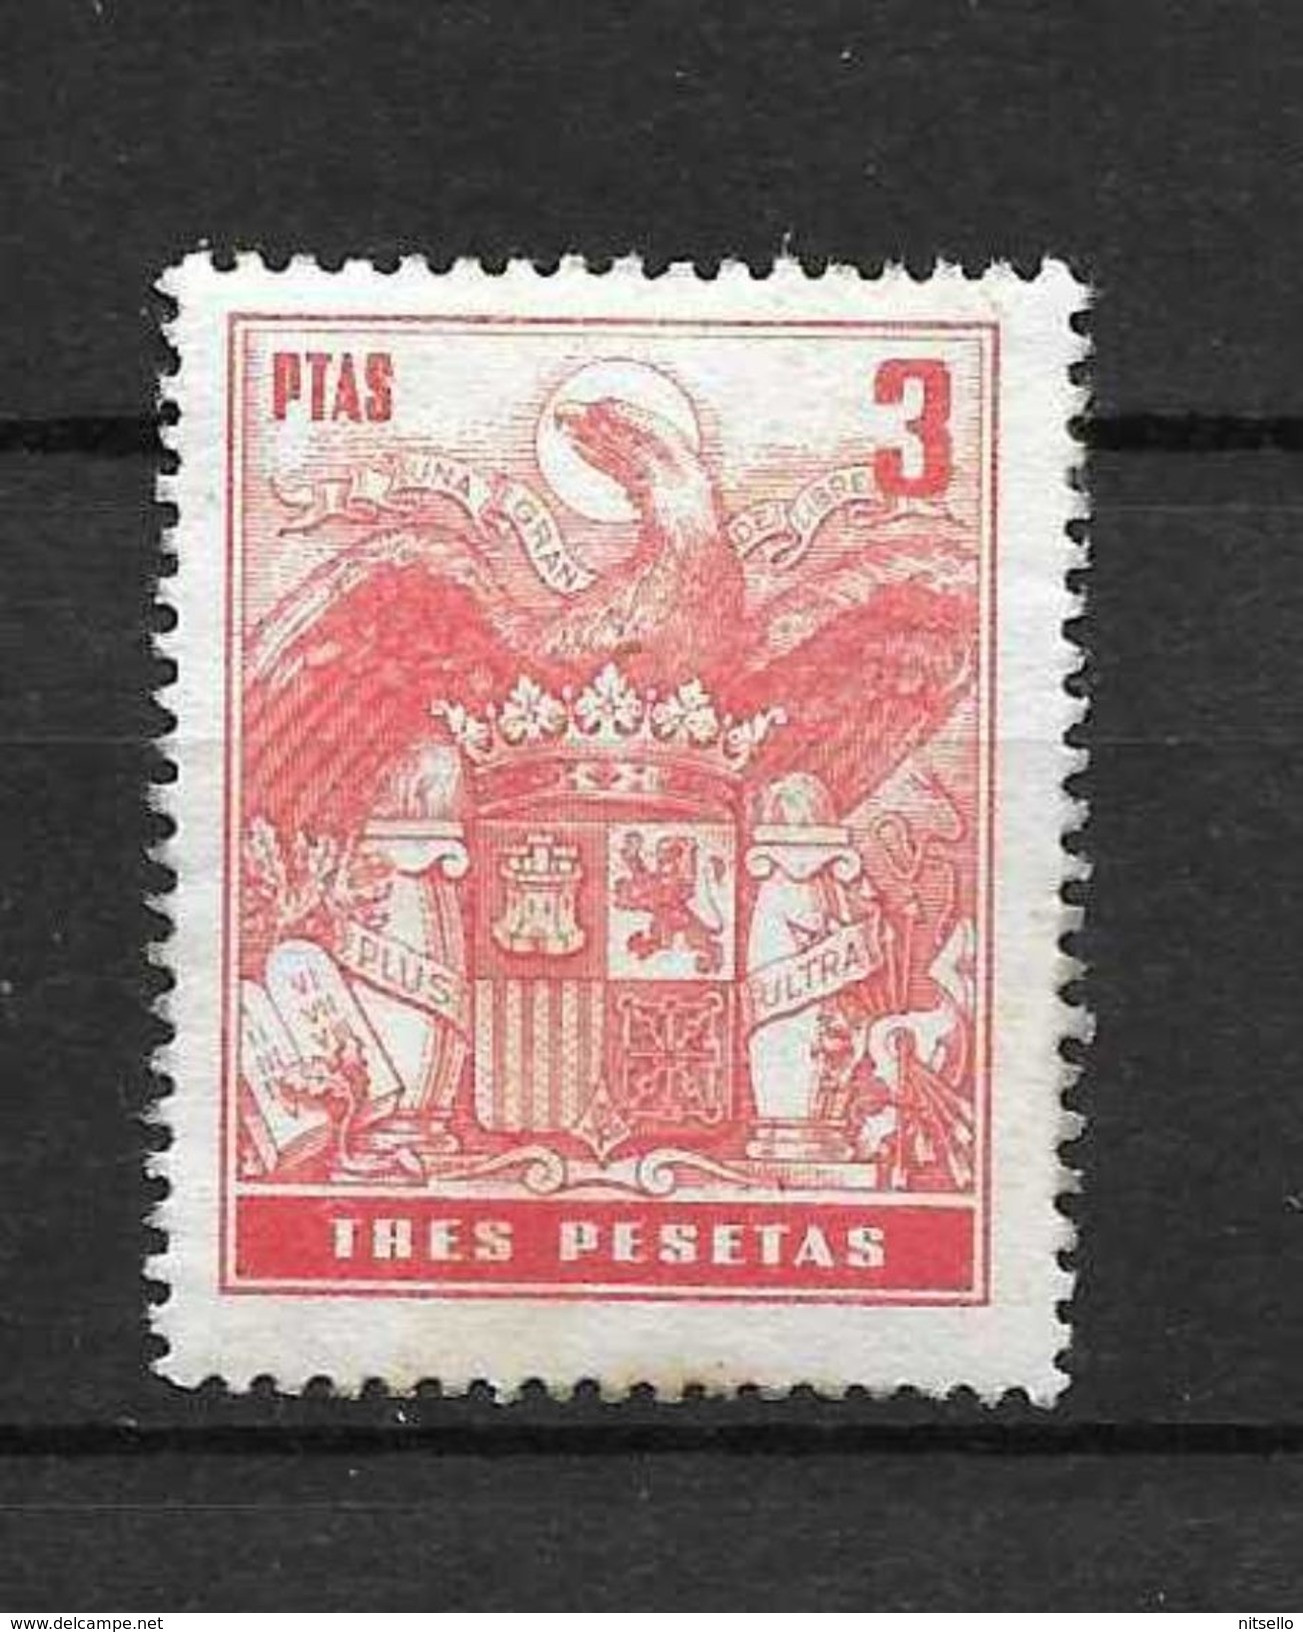 LOTE 1891 D  ///  ESPAÑA  SELLOS FISCALES  -  3 PTAS   SIN GOMA - Revenue Stamps